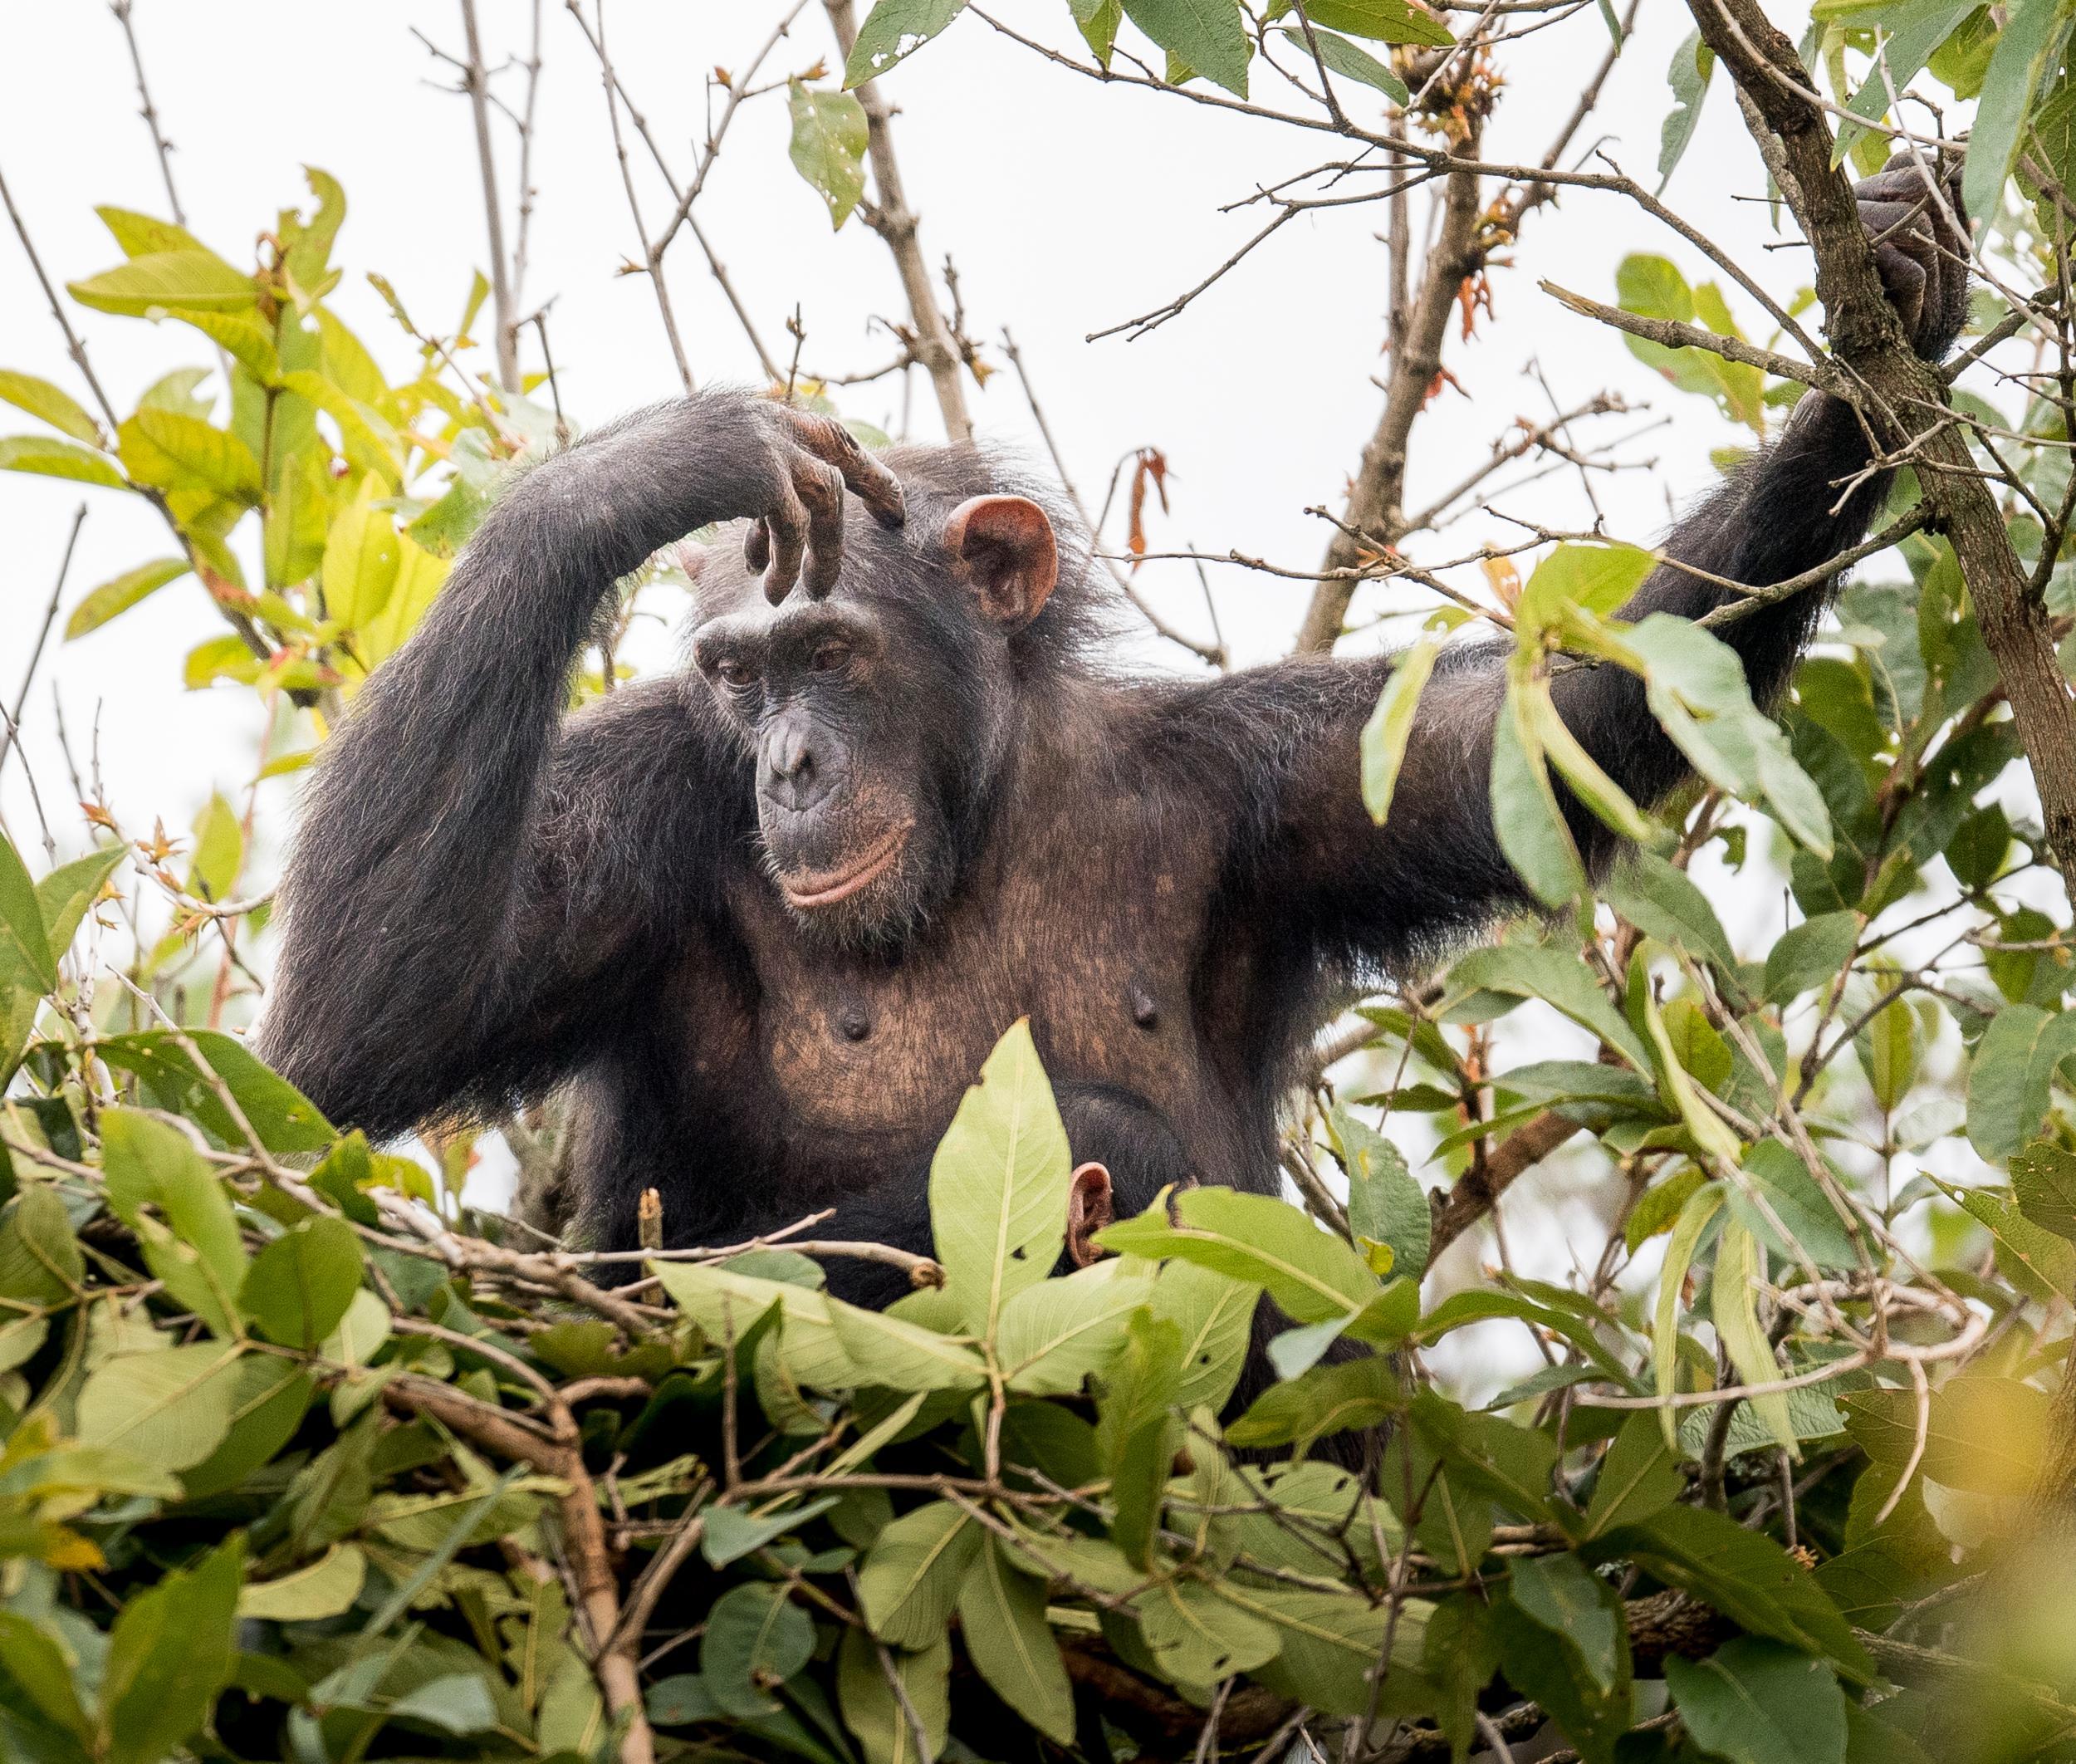 Tanzania has the big five safari animals – and chimps